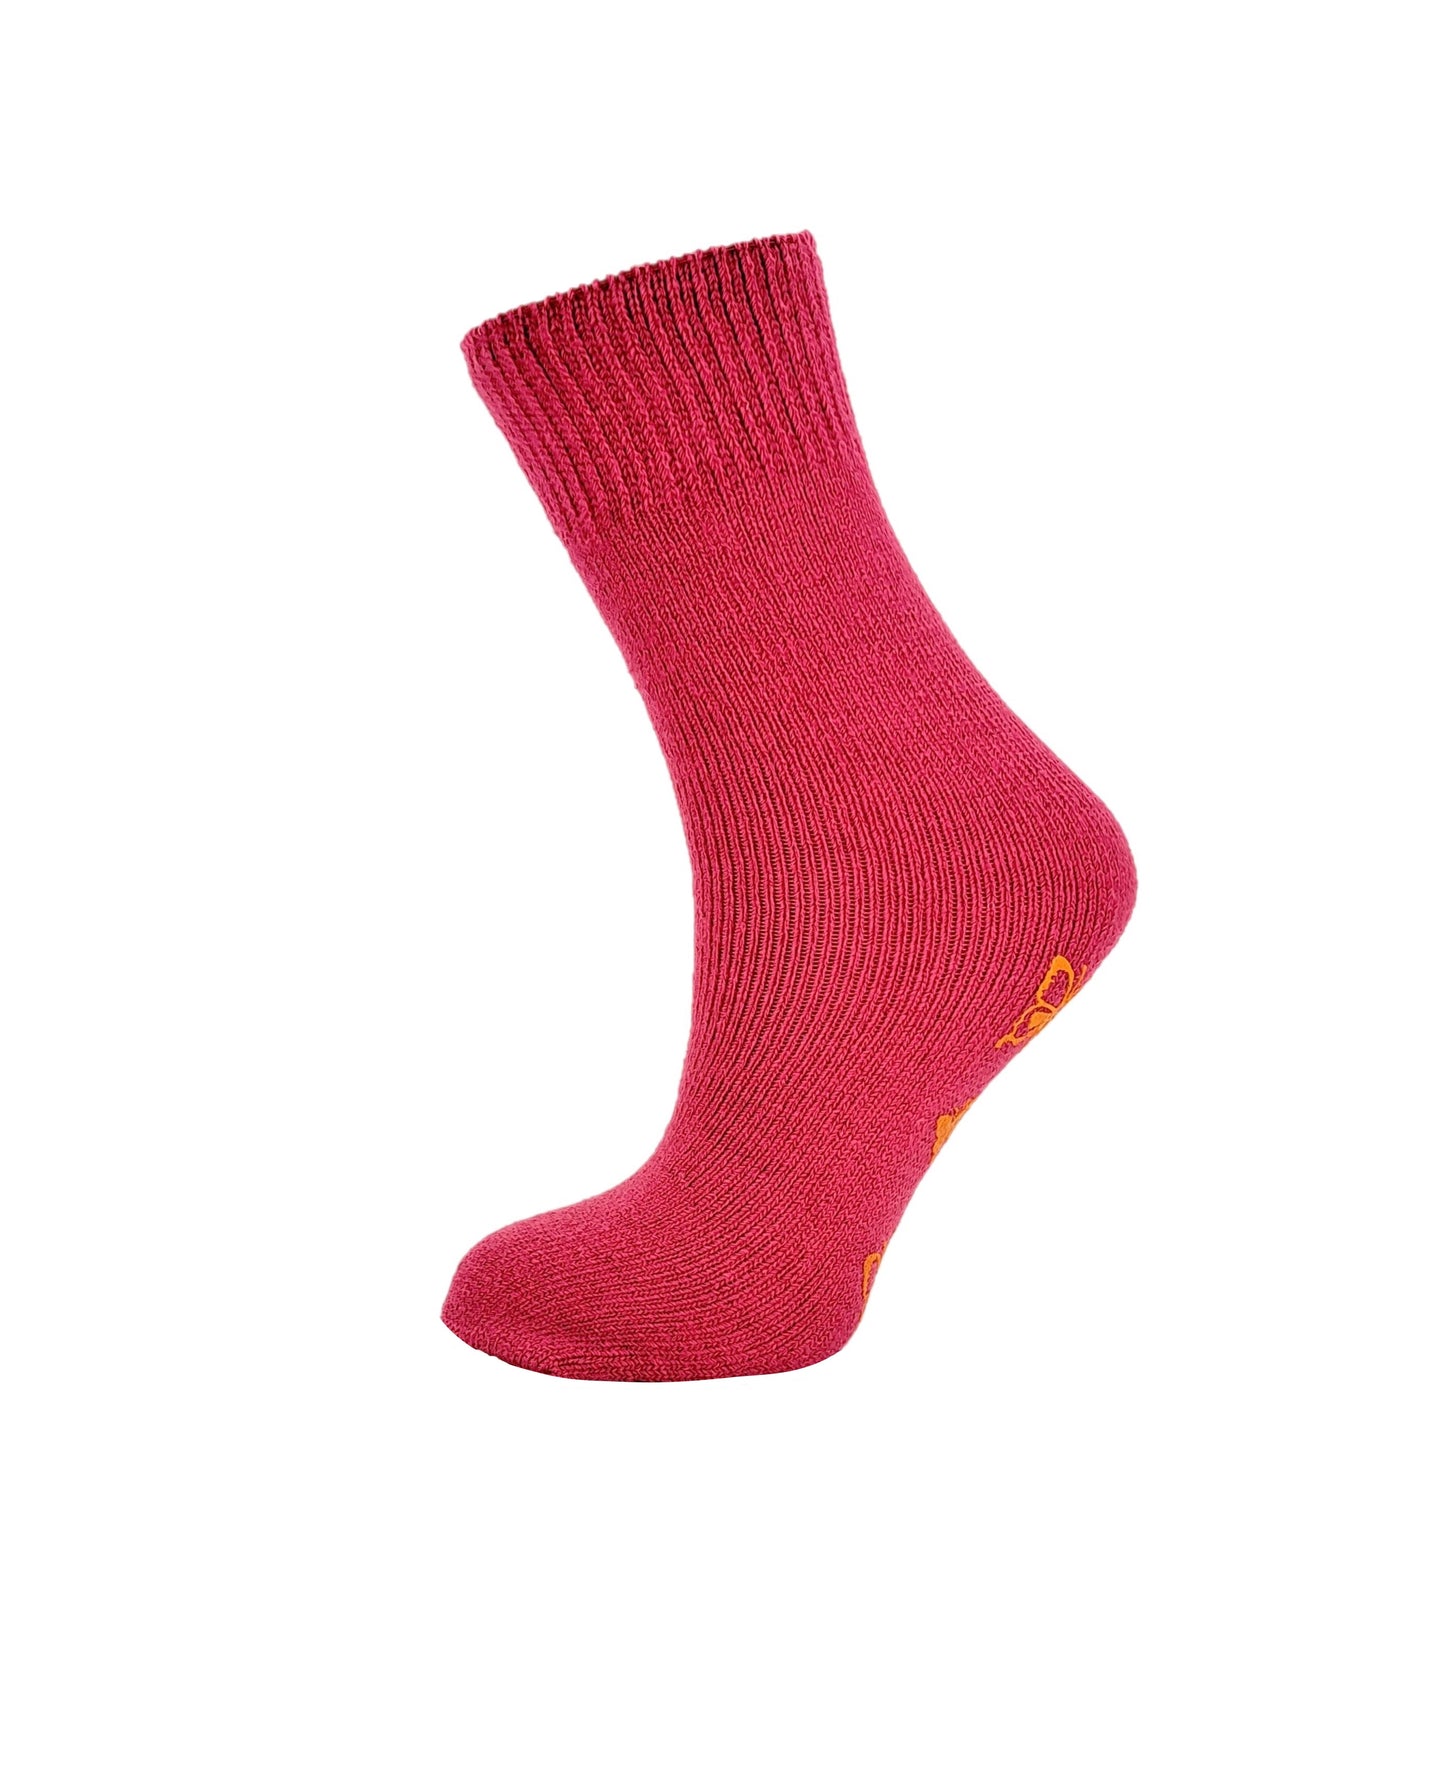 3 Pairs Older Kids Thermal Winter Non Skid Slipper Socks One Size UK 4-6